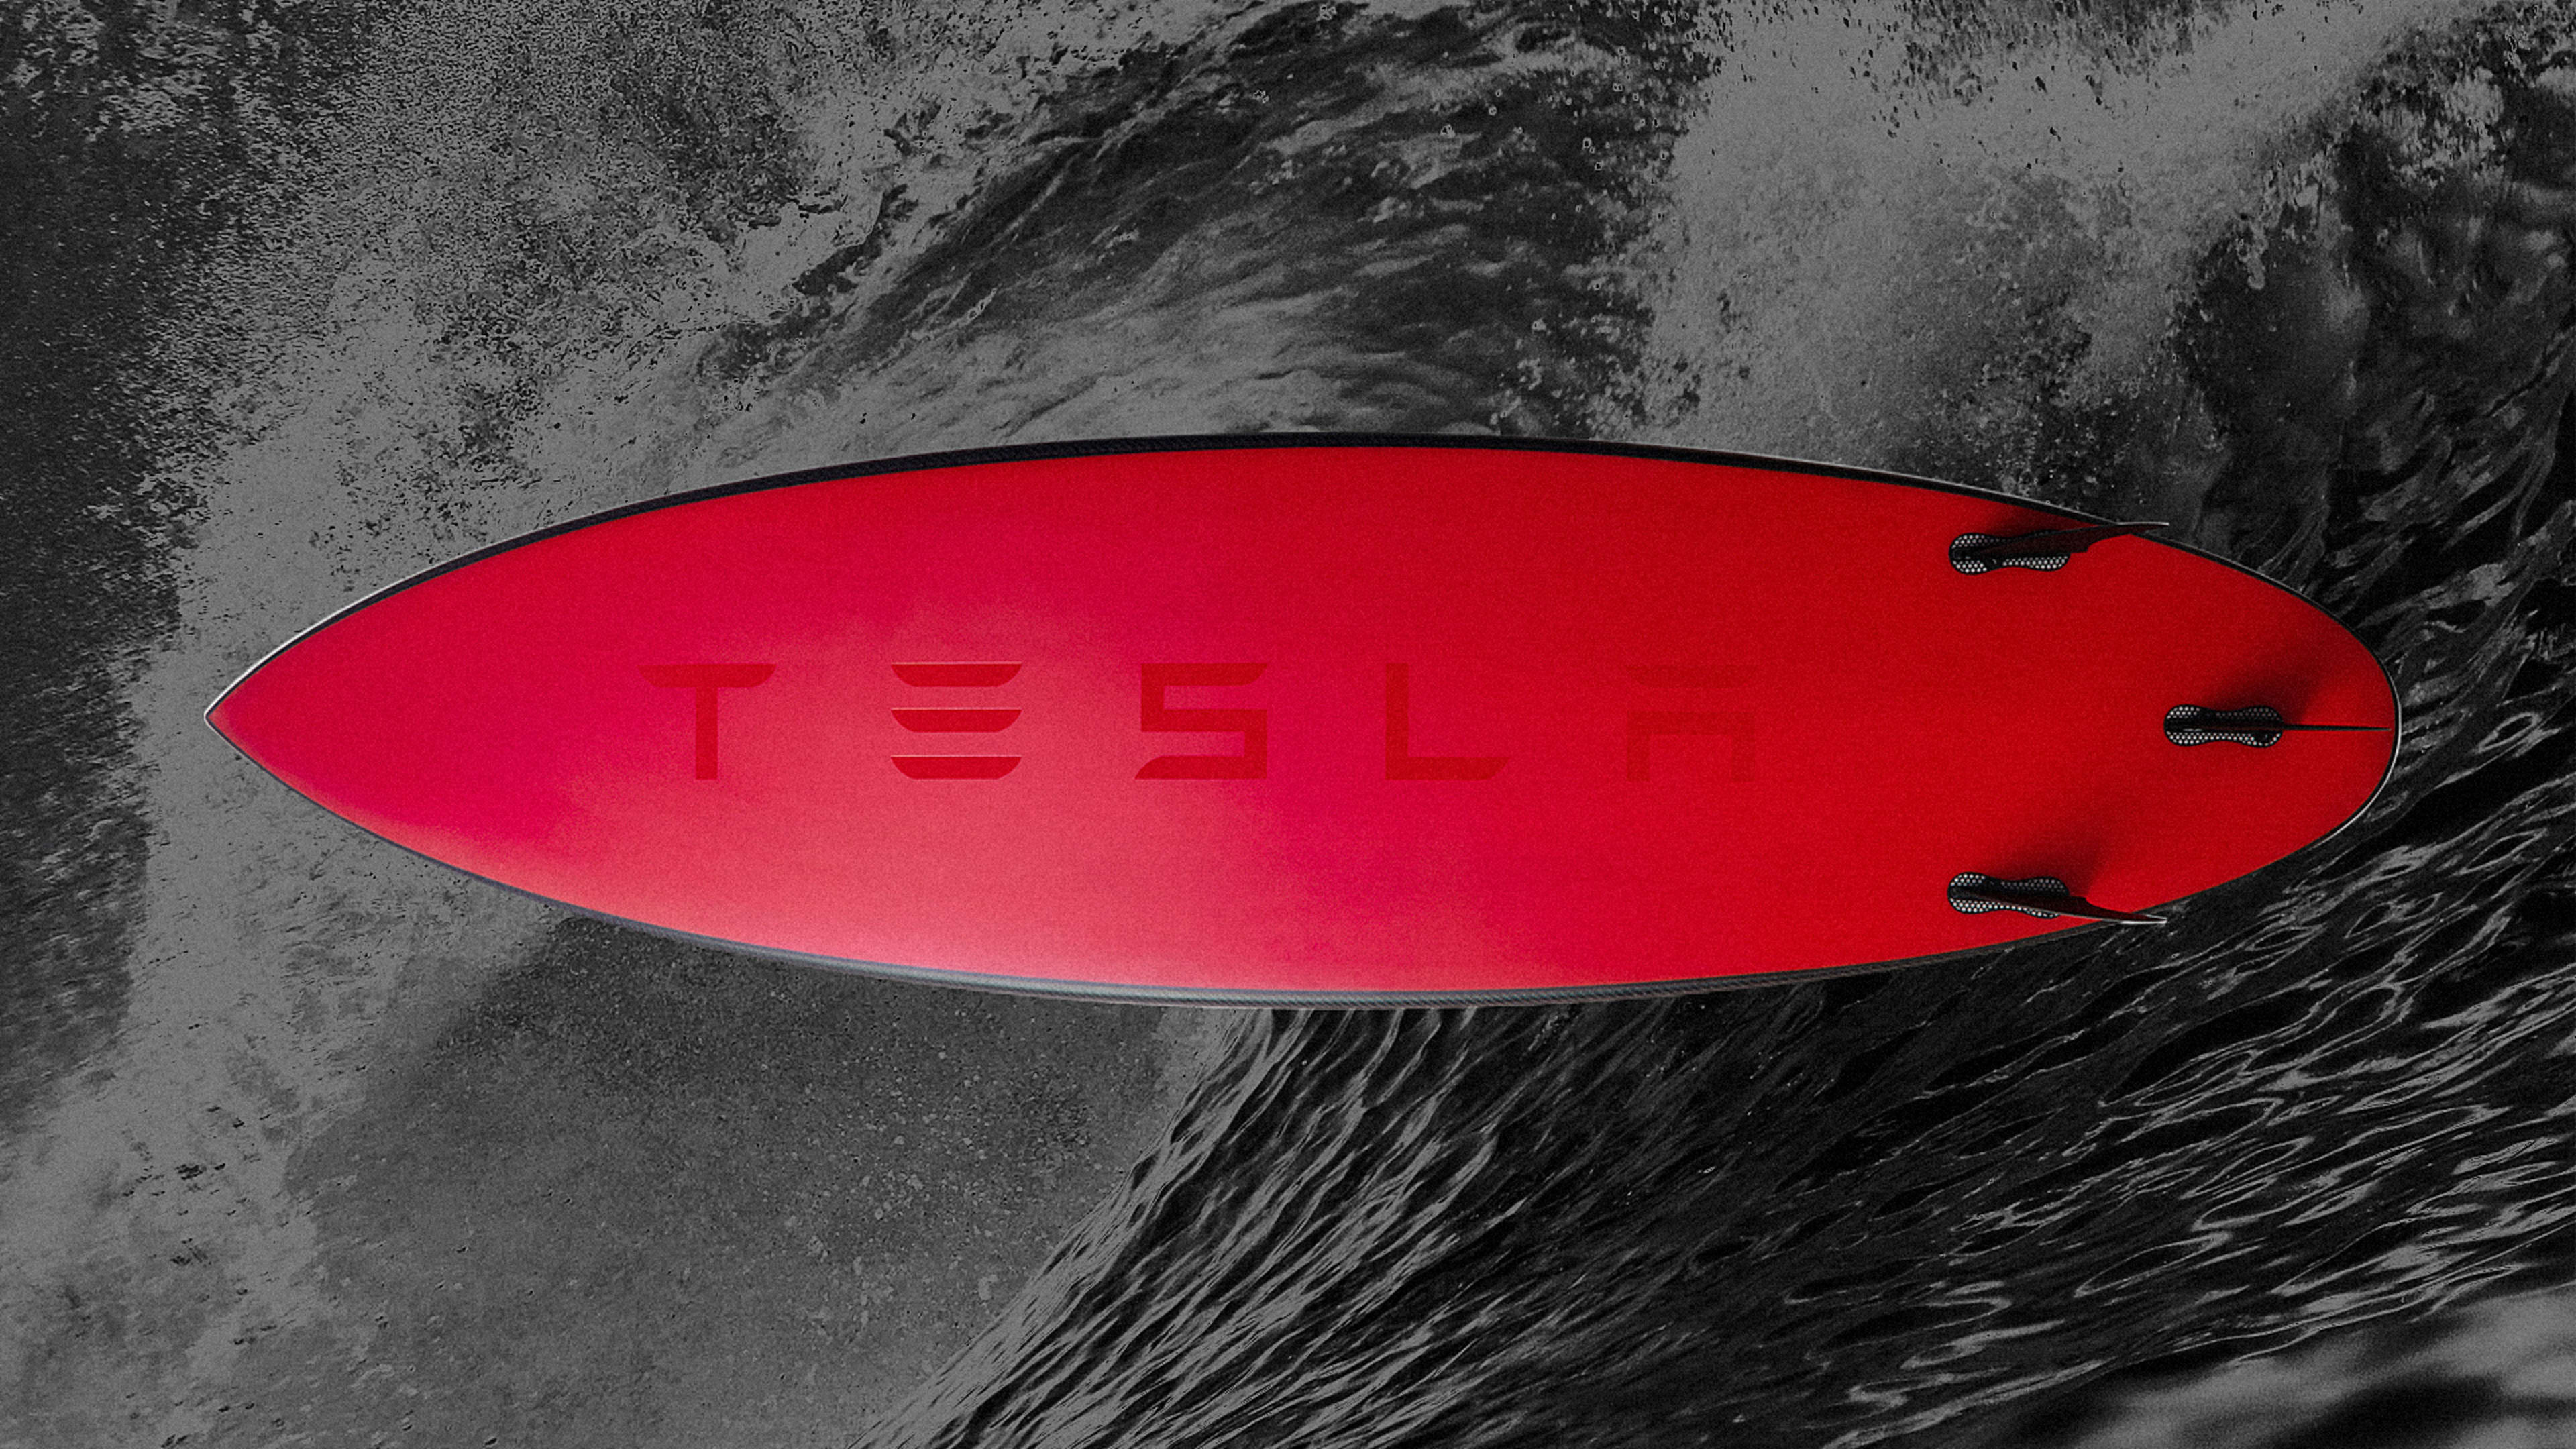 Tesla’s $1,500 carbon fiber surfboard is dumb